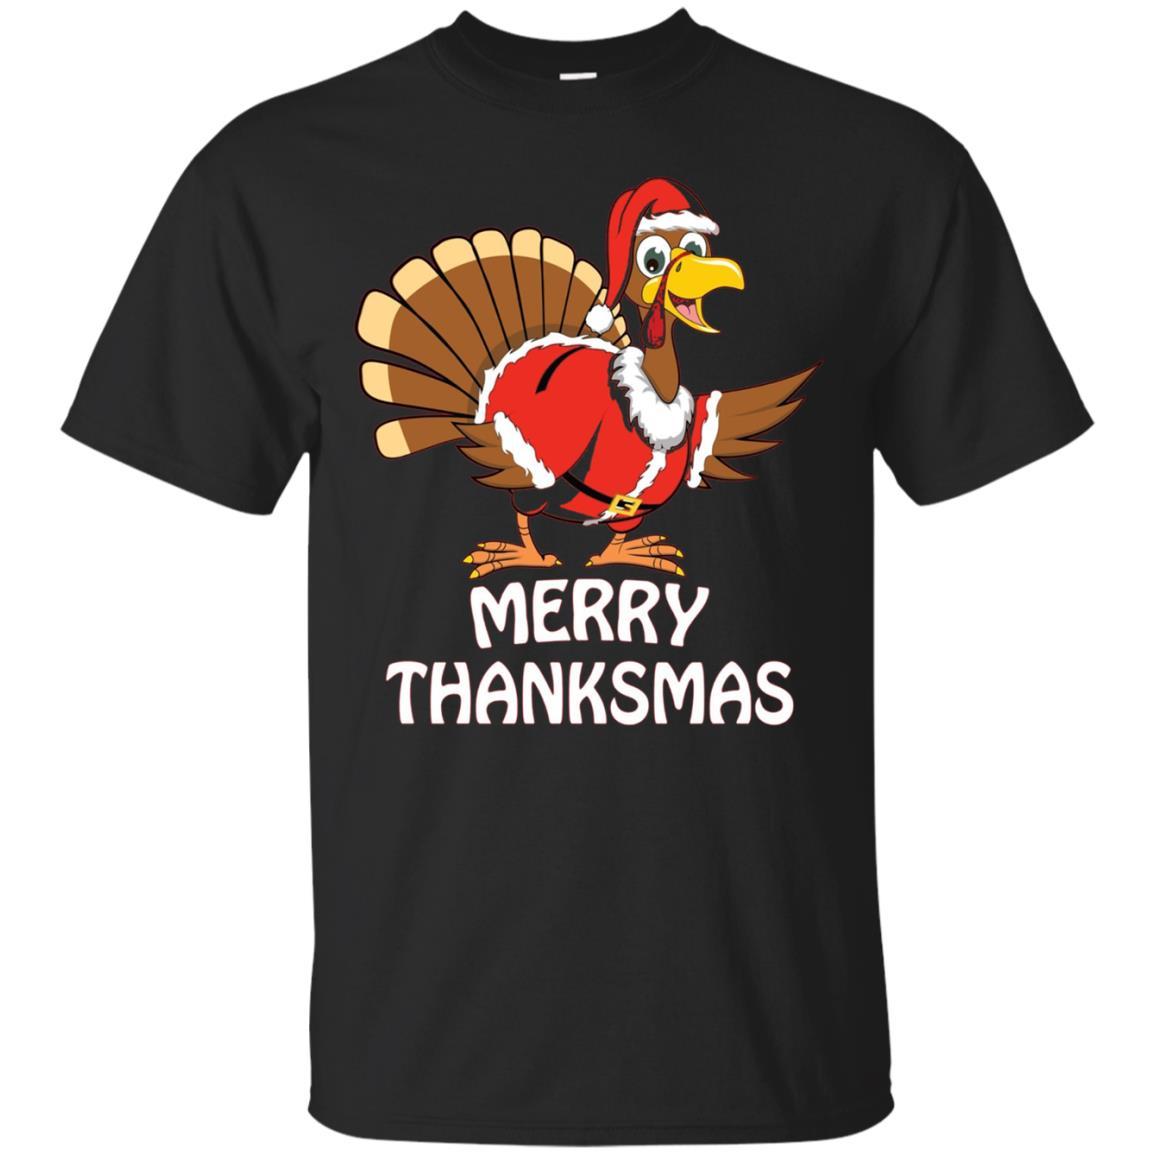 Funny Merry Thanksmas T-shirt | Thanksgiving Christmas Shirt